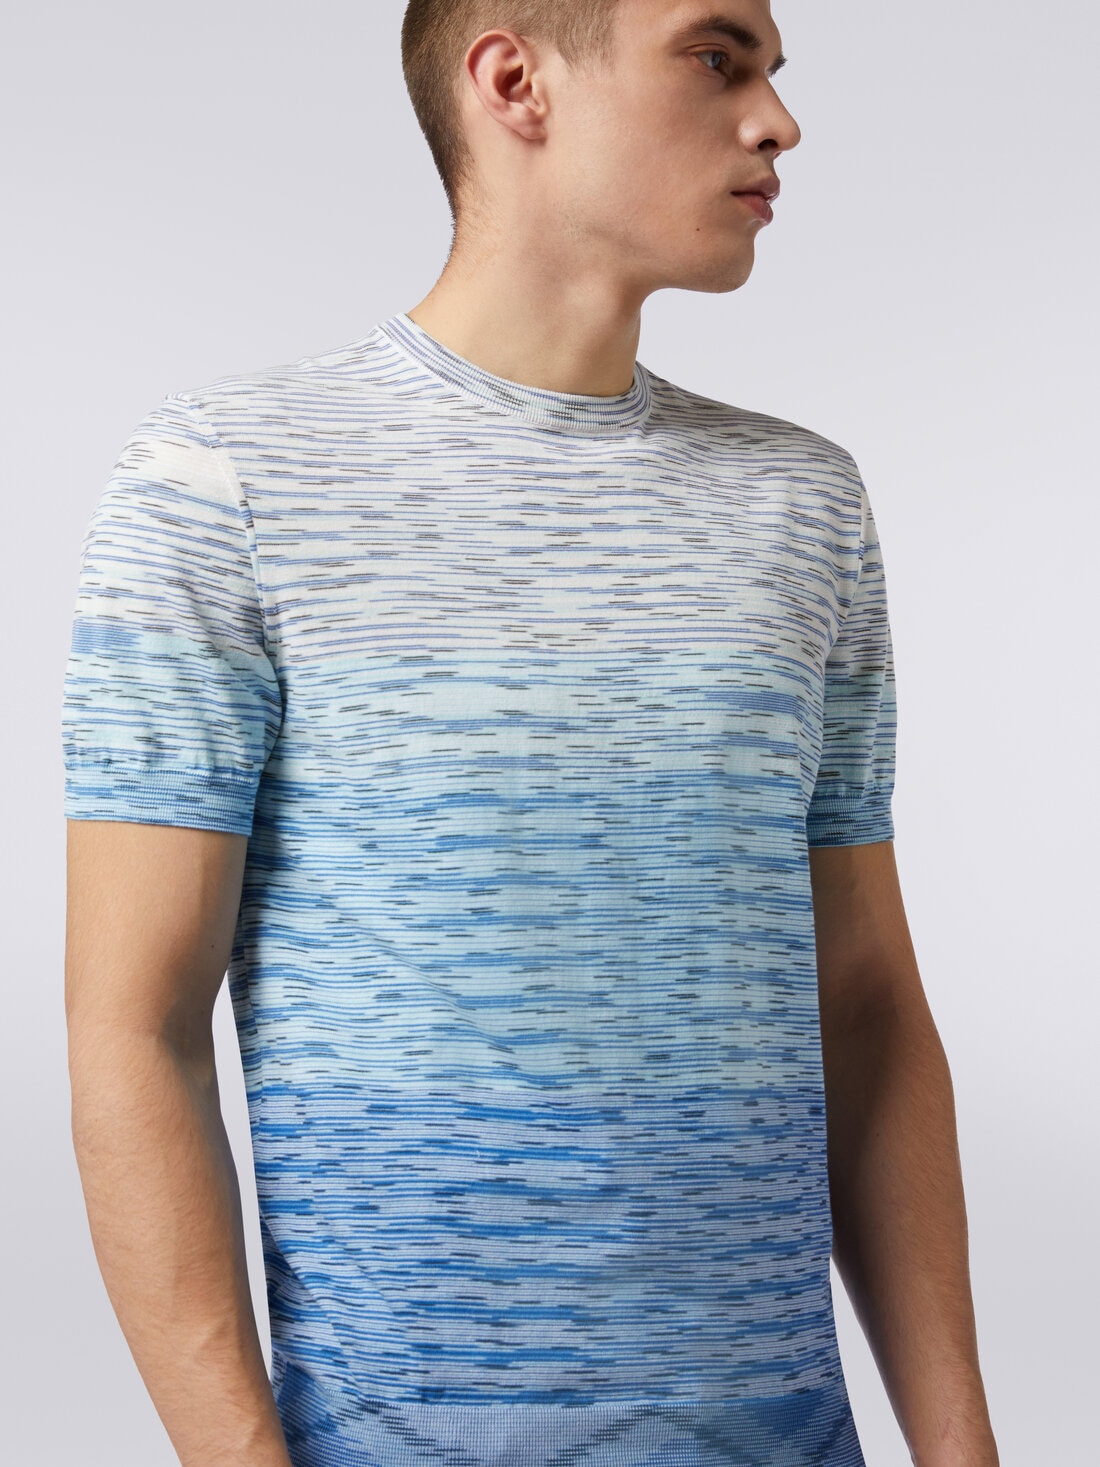 Crew-neck T-shirt in dégradé slub cotton, Multicoloured  - US24SL0IBK012QS72F0 - 4